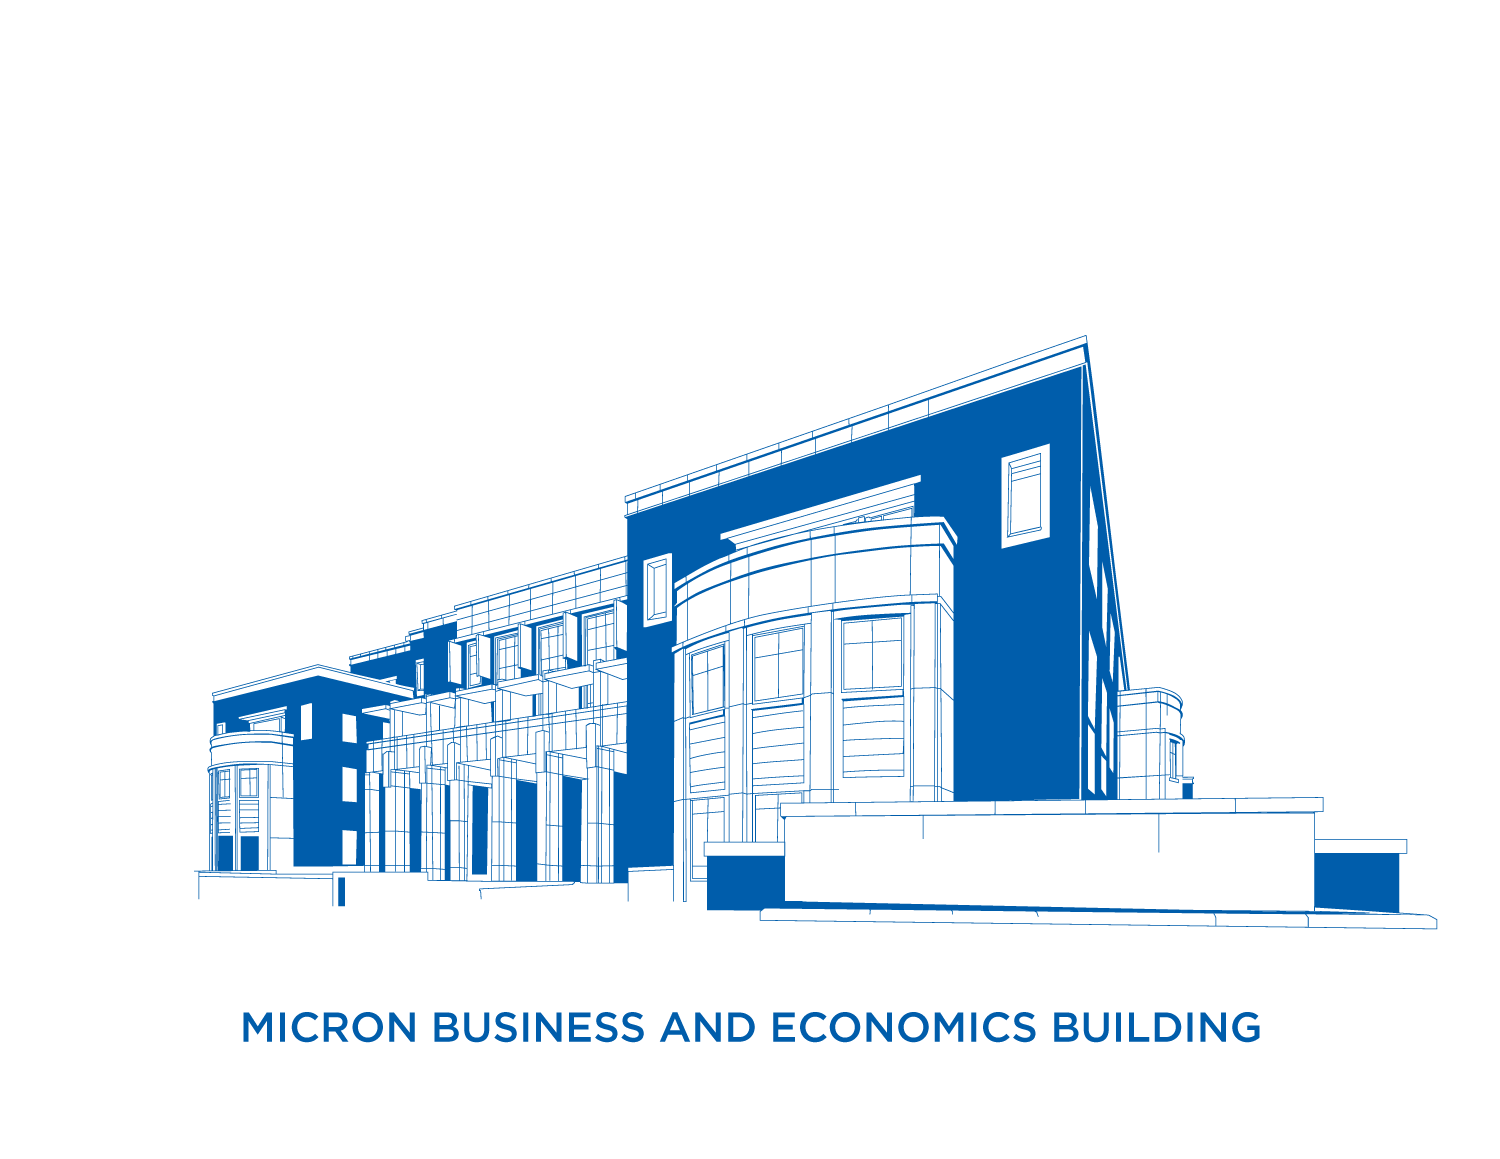 Micron Business and Economics Building